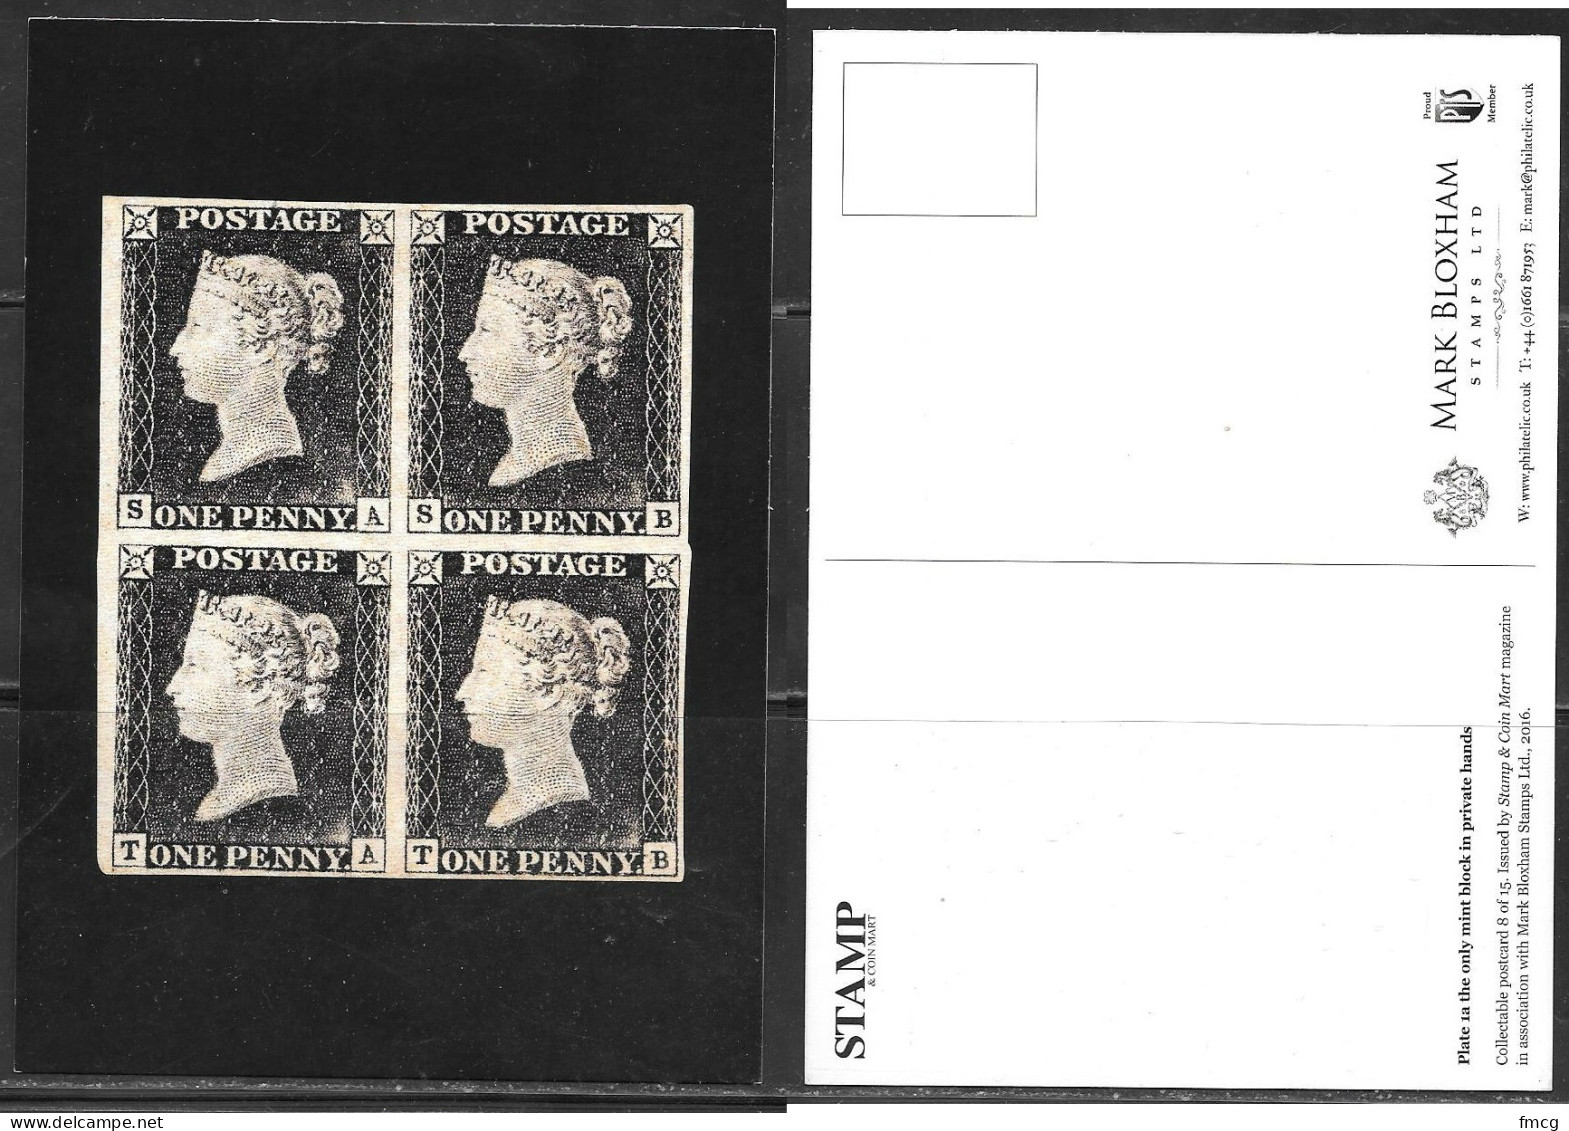 Stamps, UK 1a Mint Plate Block 1a, Unused  - Francobolli (rappresentazioni)